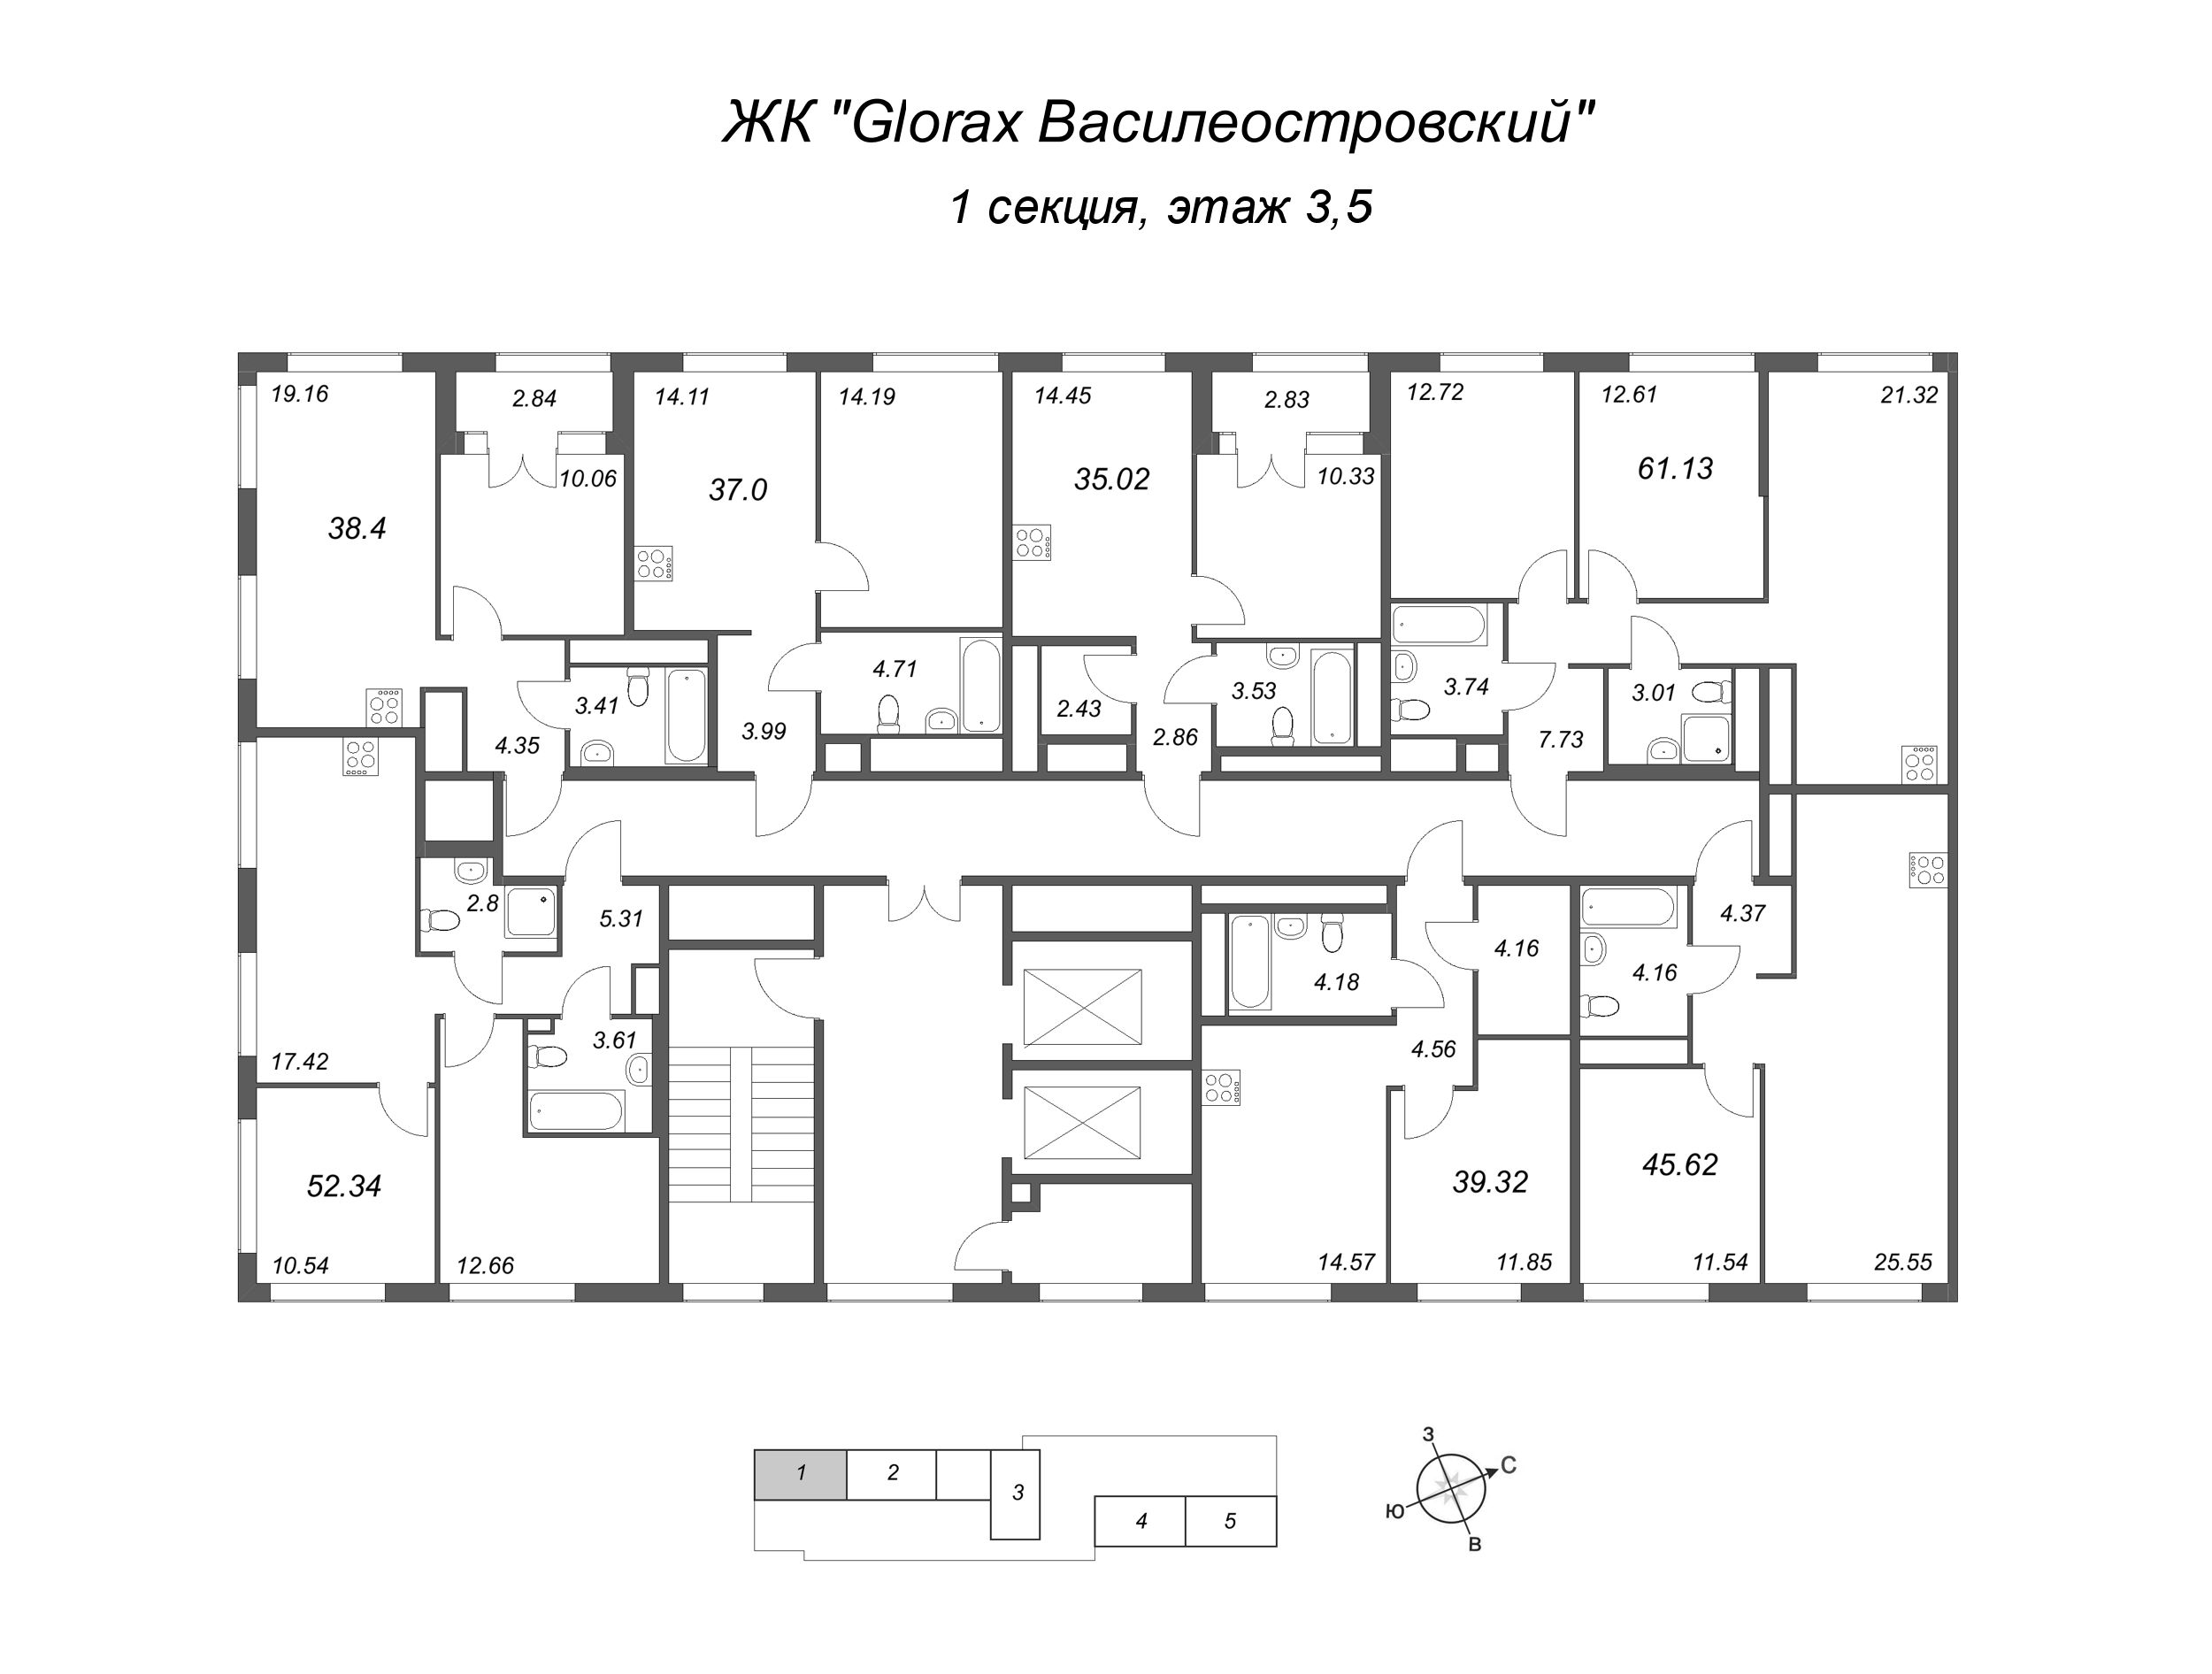 3-комнатная (Евро) квартира, 61.13 м² - планировка этажа